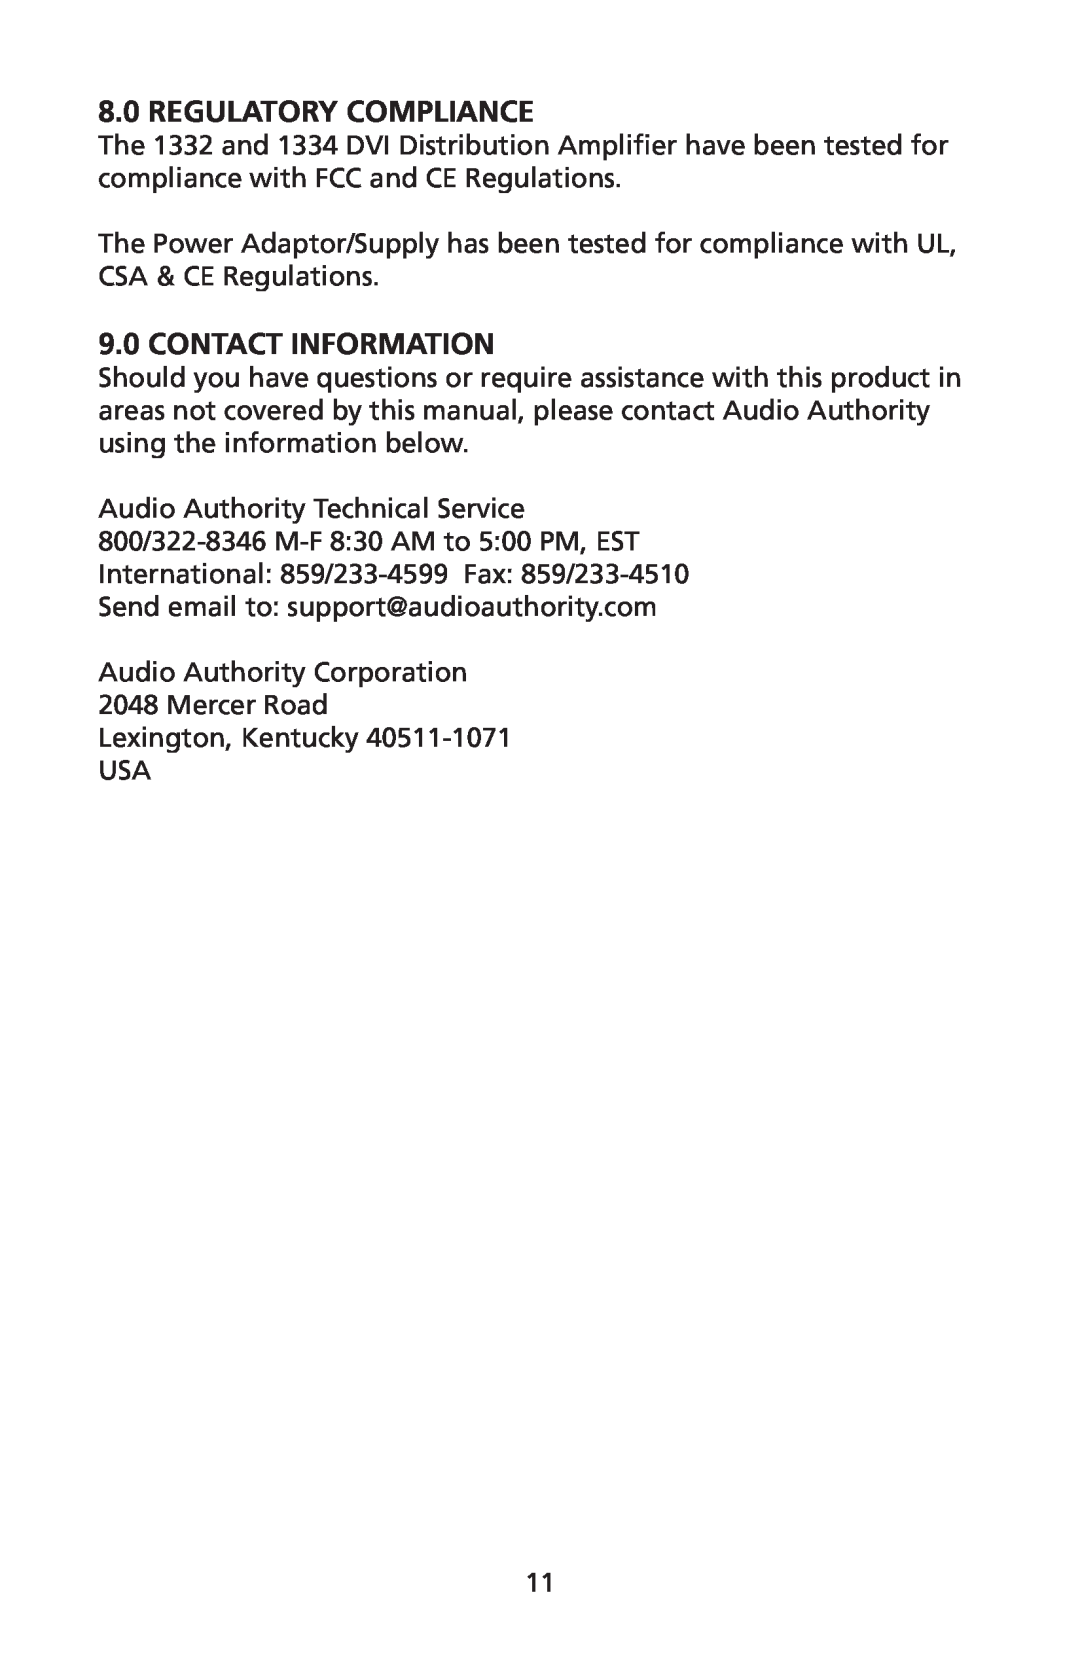 Audio Authority 1332, 1334 user manual Regulatory Compliance, Contact Information 